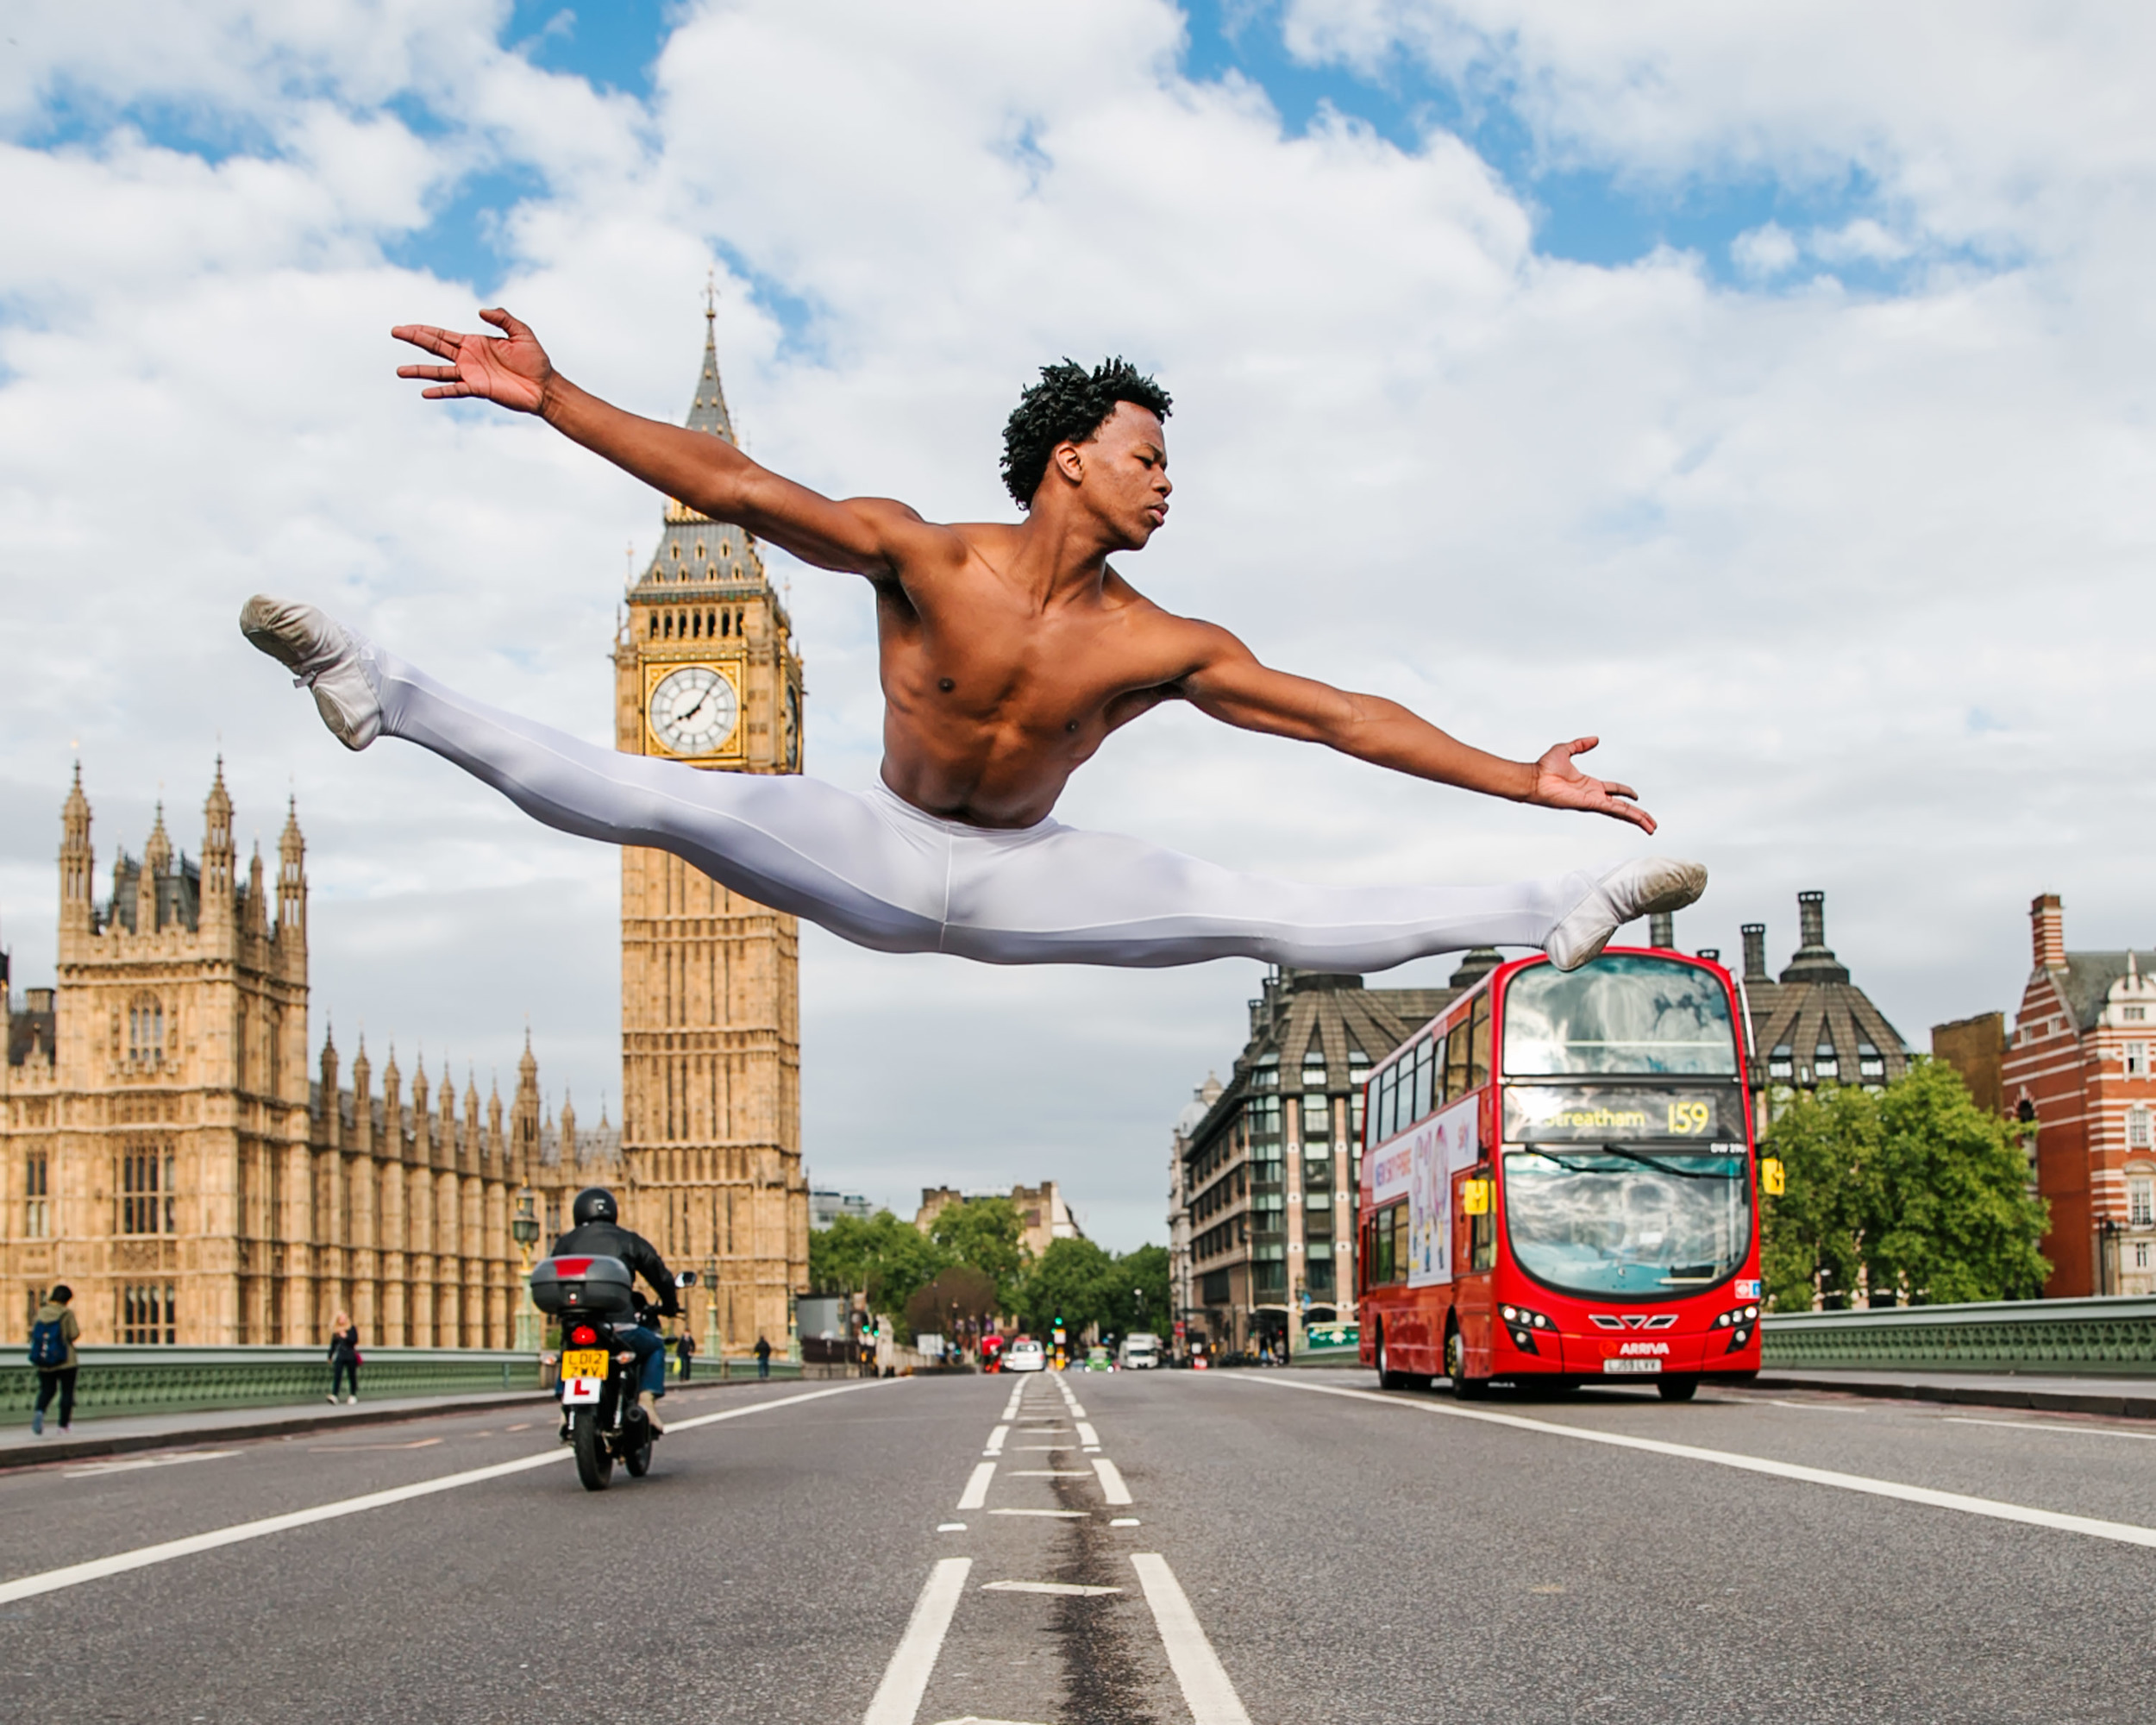 Публично: стриптиз и йога на улицах большого города. ФОТО